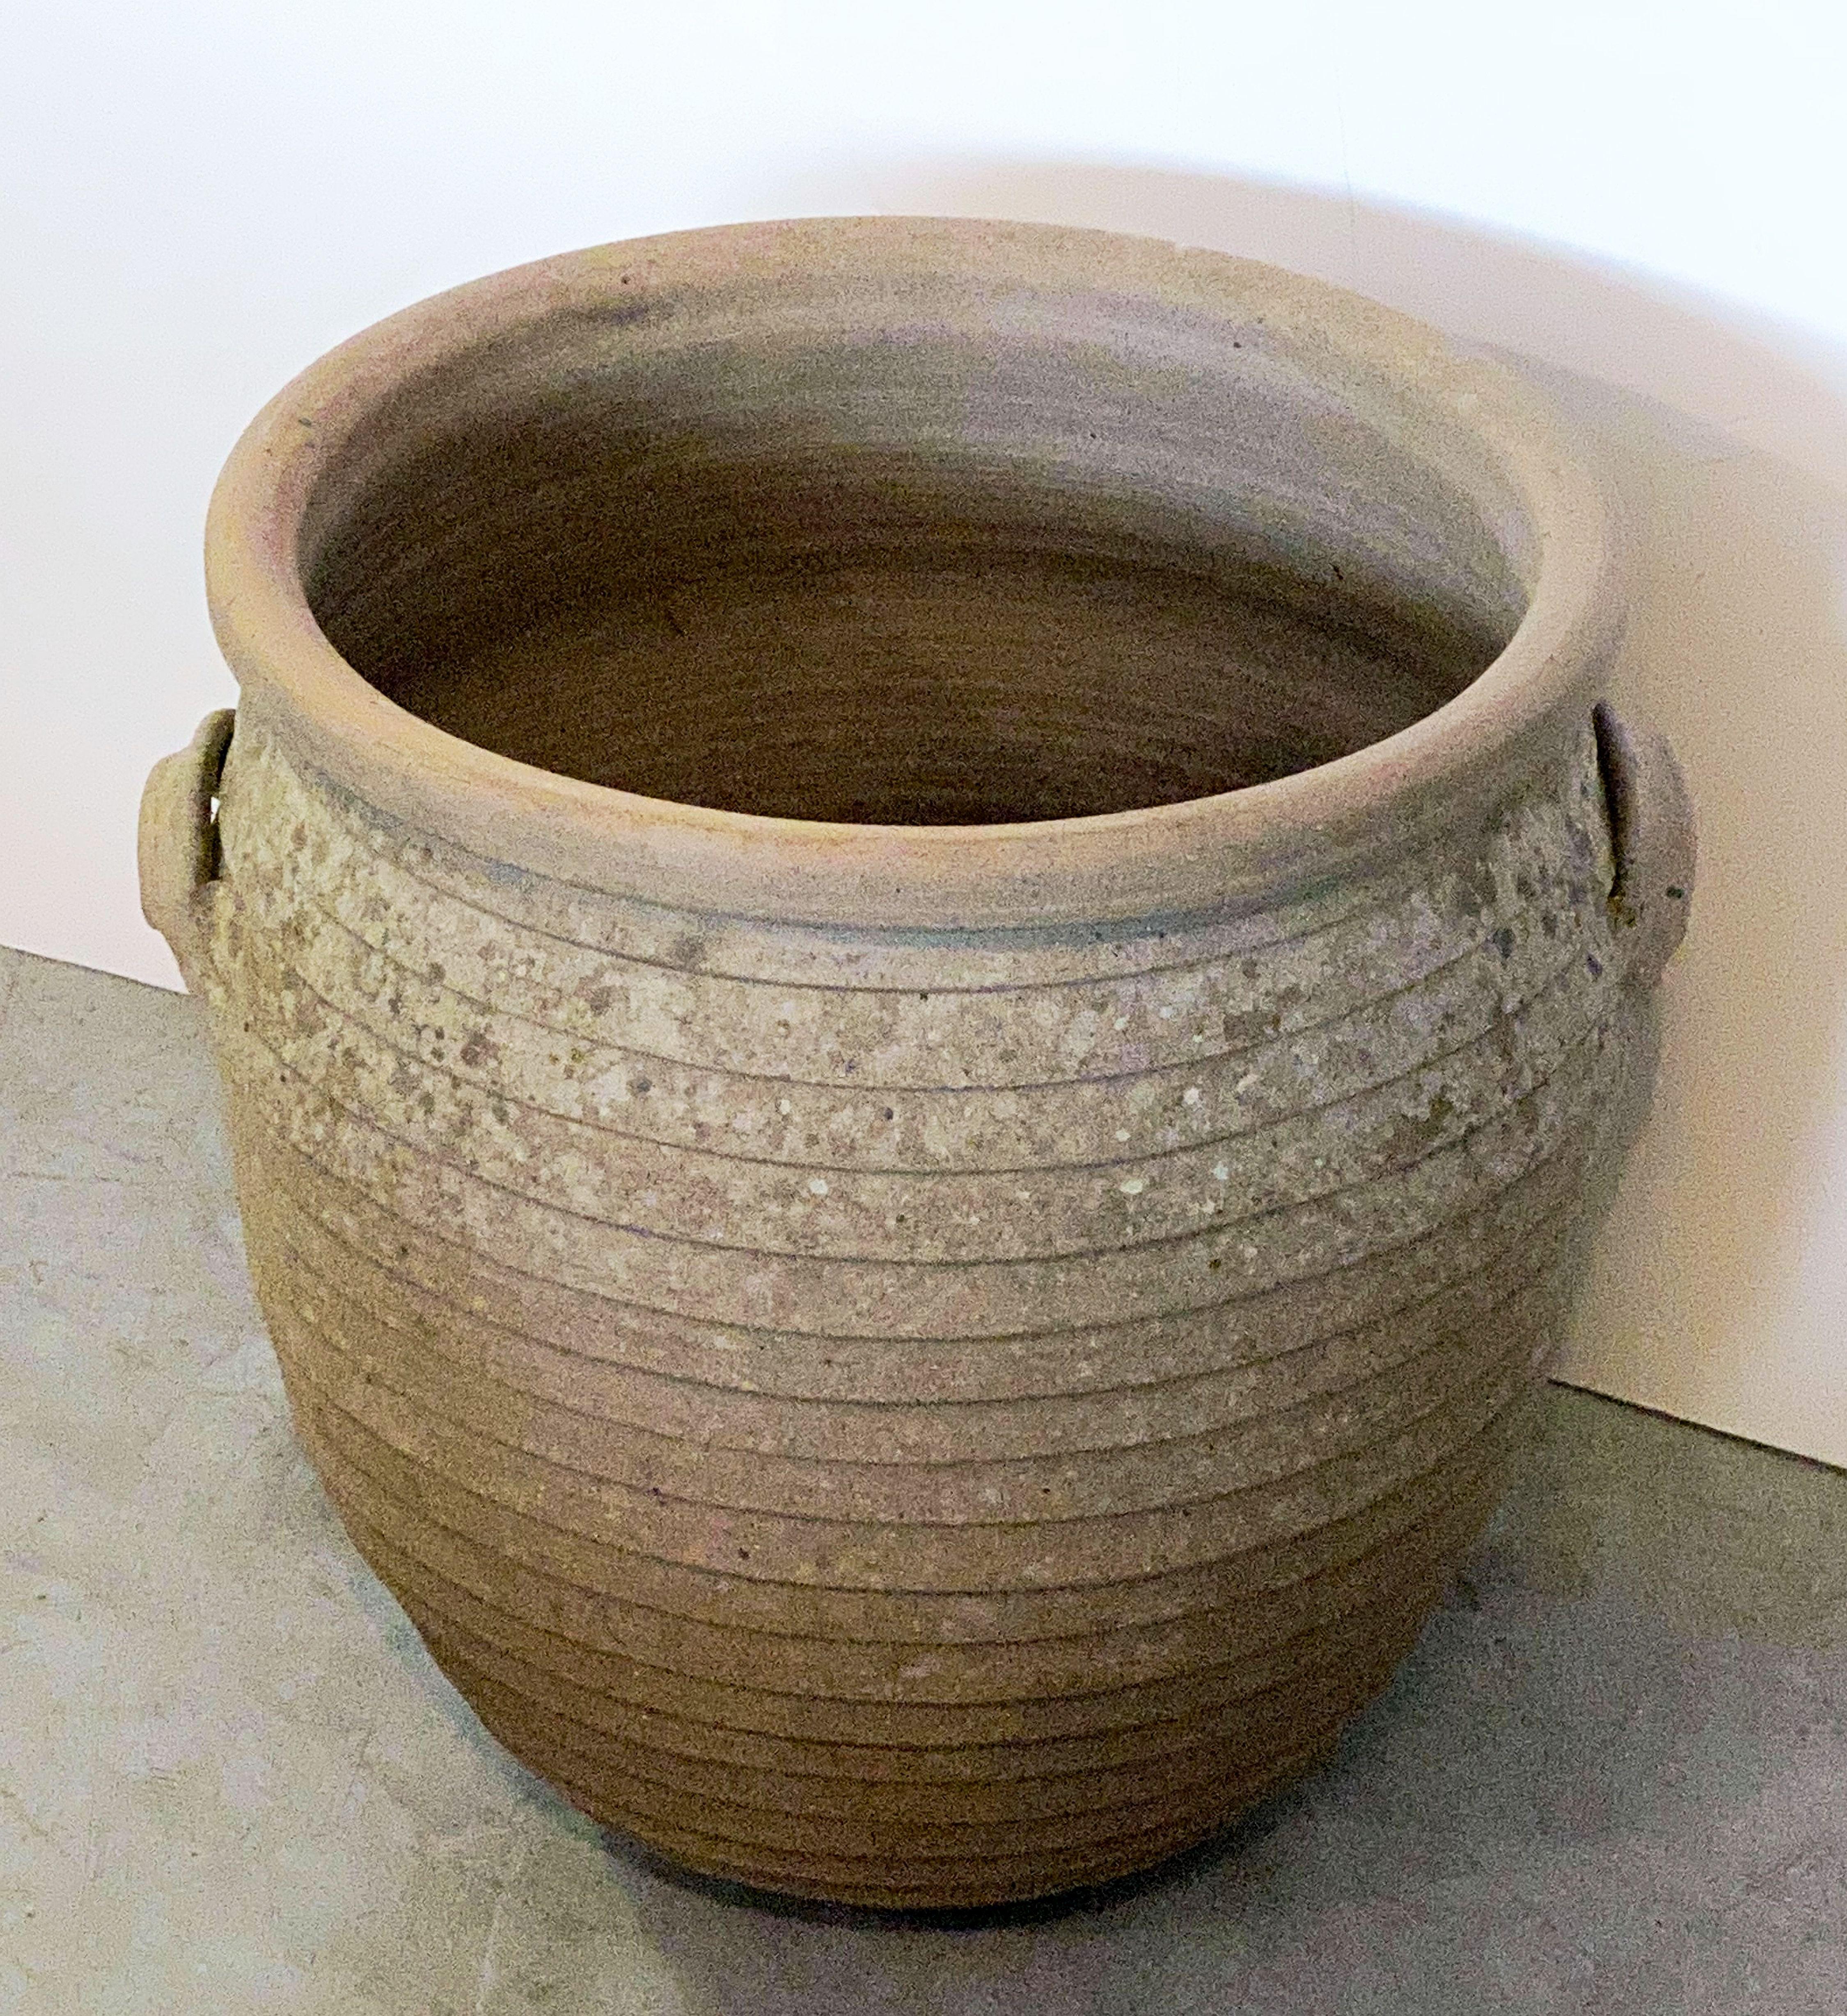 English Ribbed Terracotta Pot or Planter Jar for the Garden 11